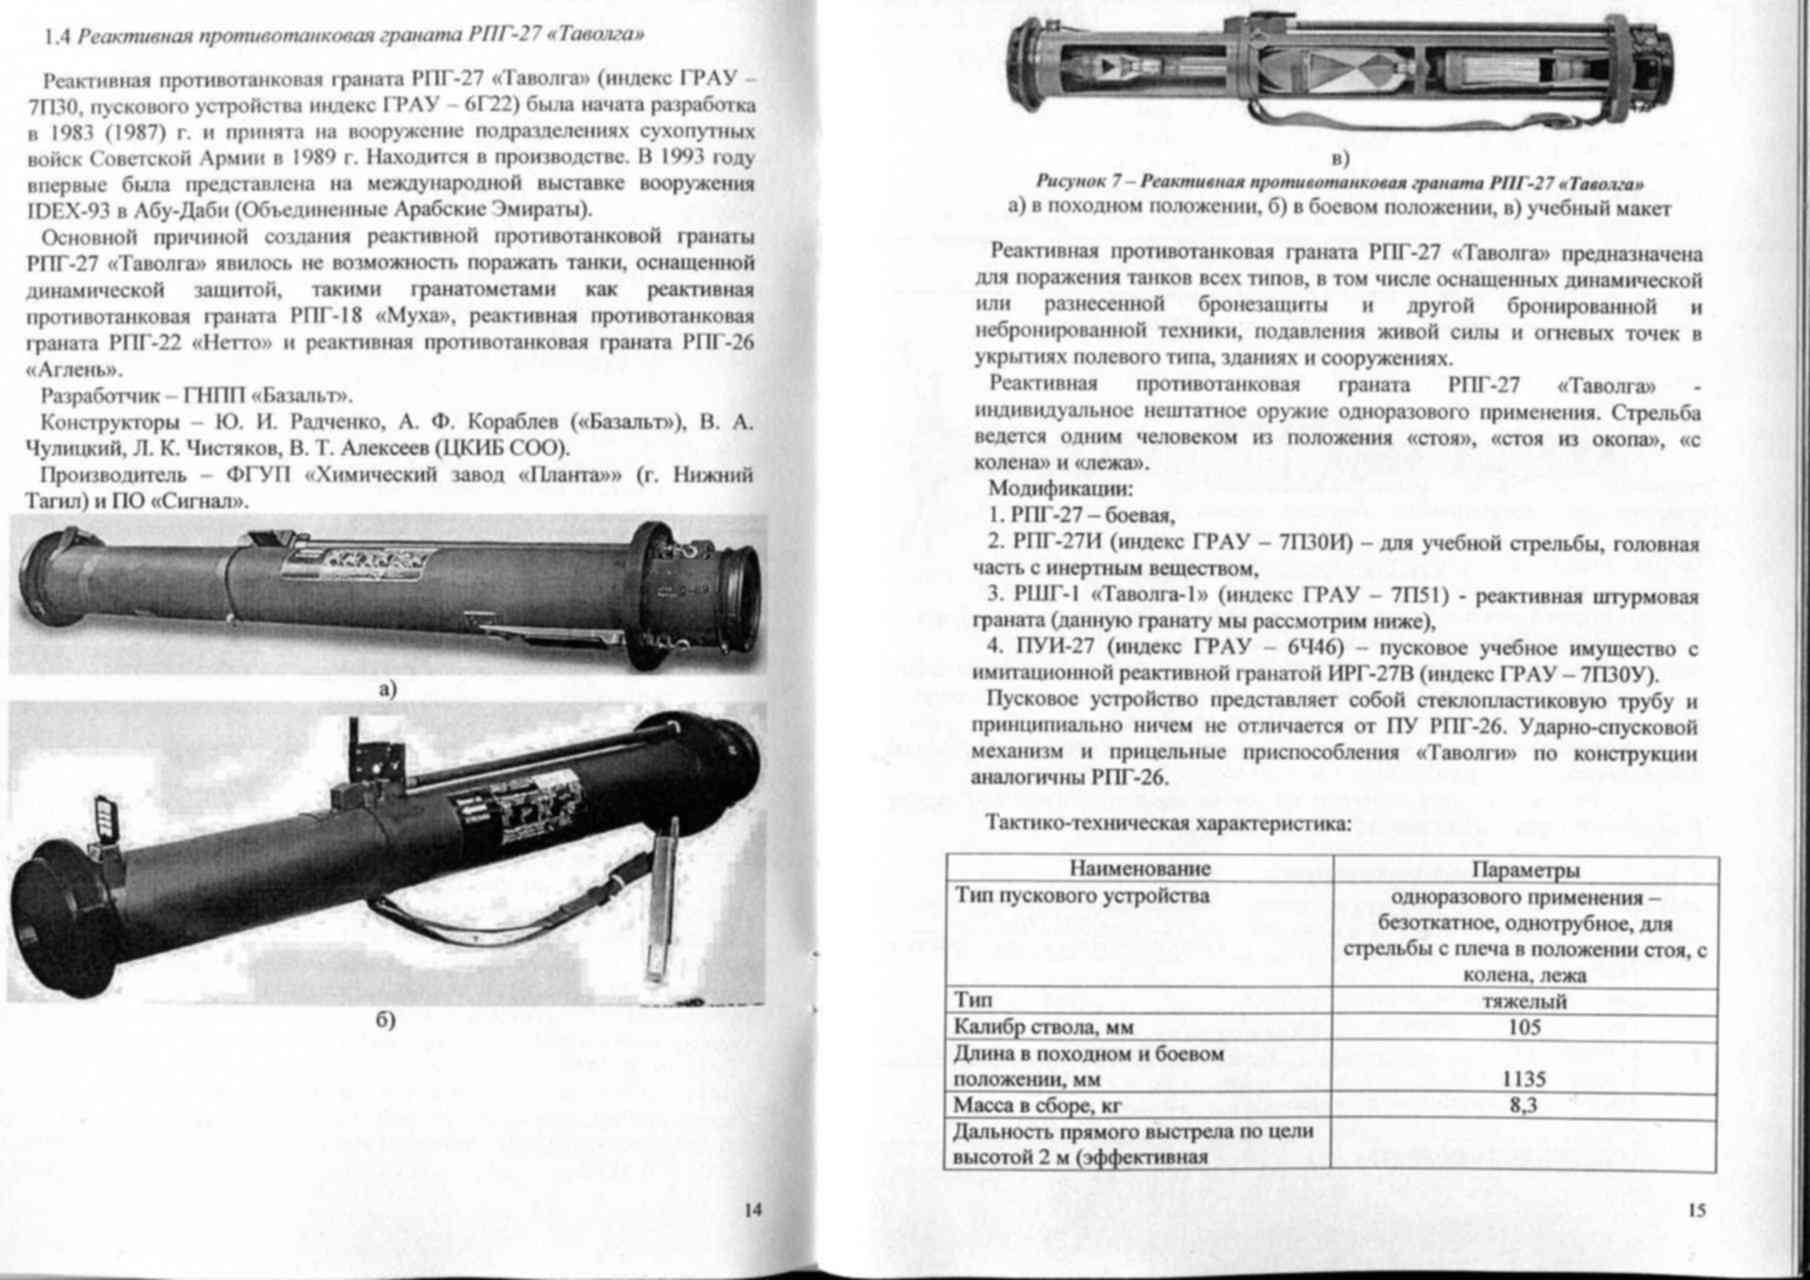 Weaponplace.ru - реактивная противотанковая граната рпг-26 «аглень»